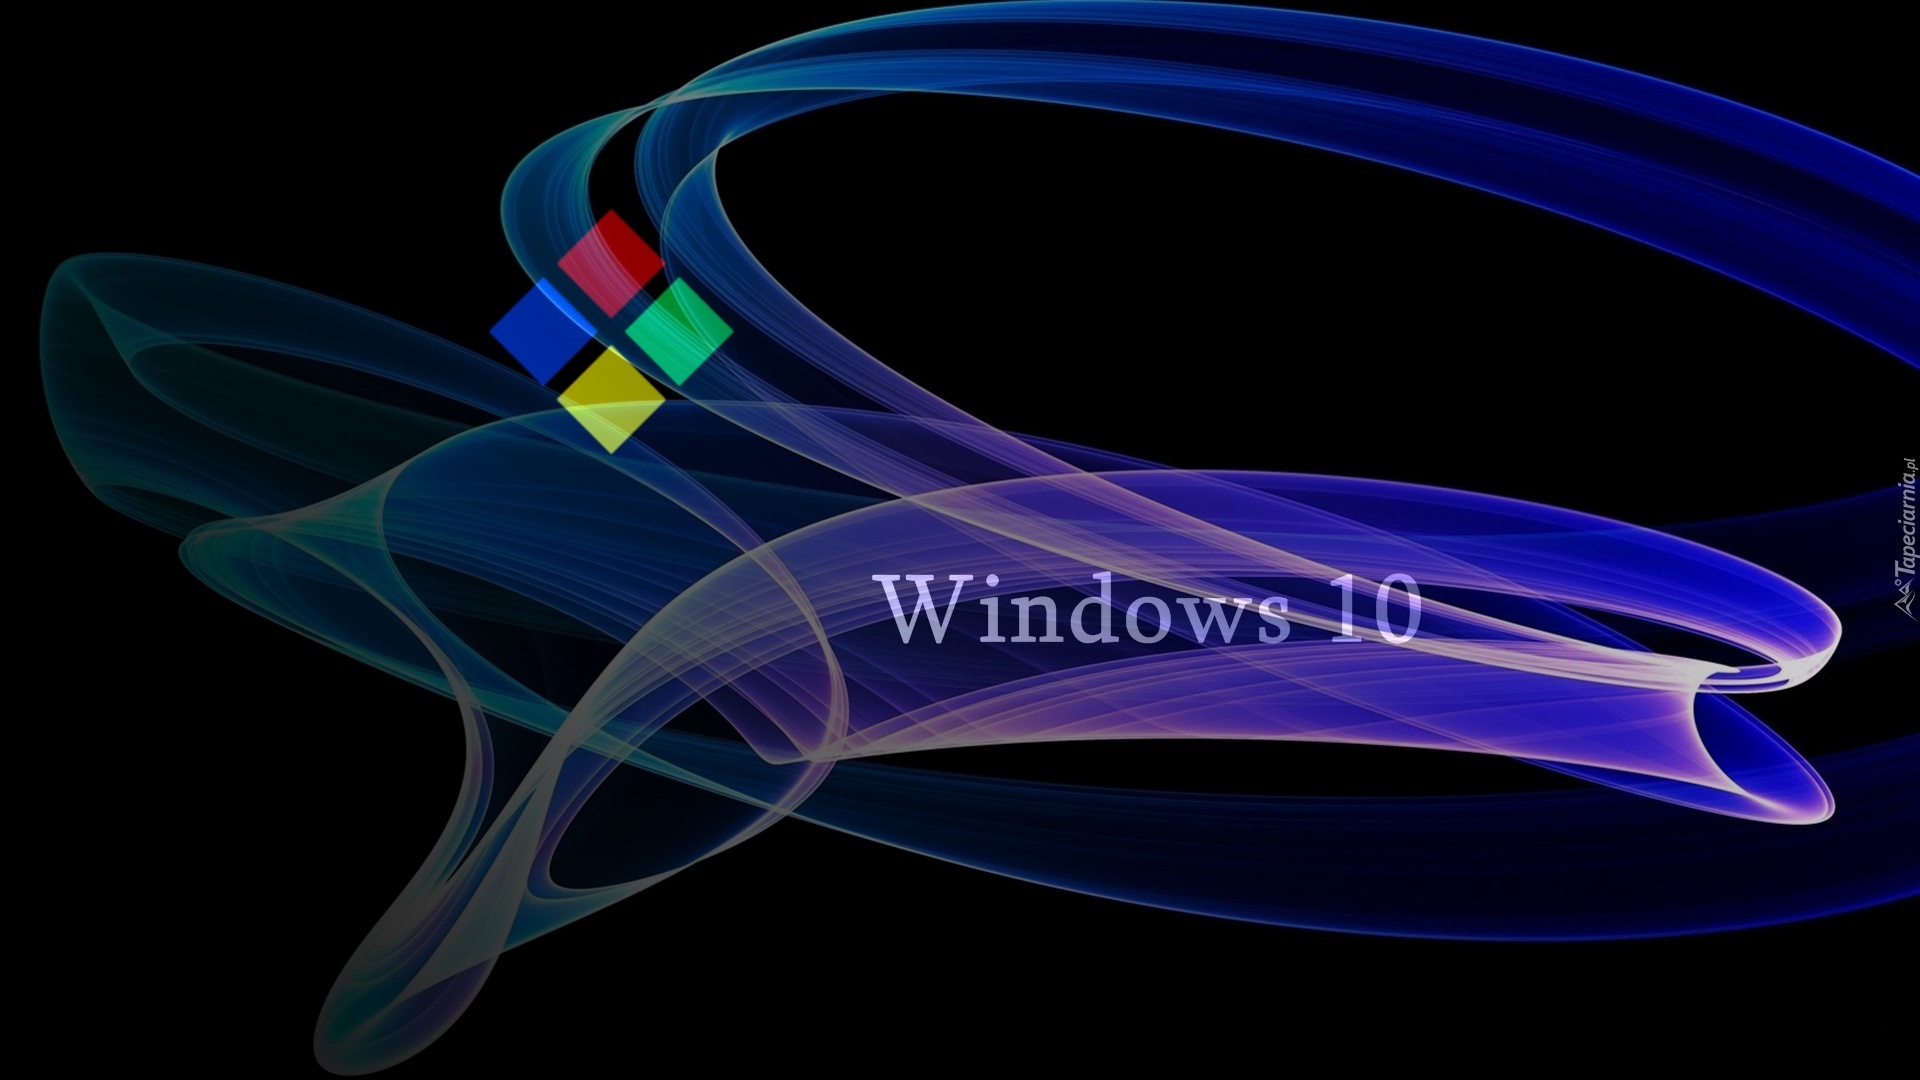 System, Windows 10